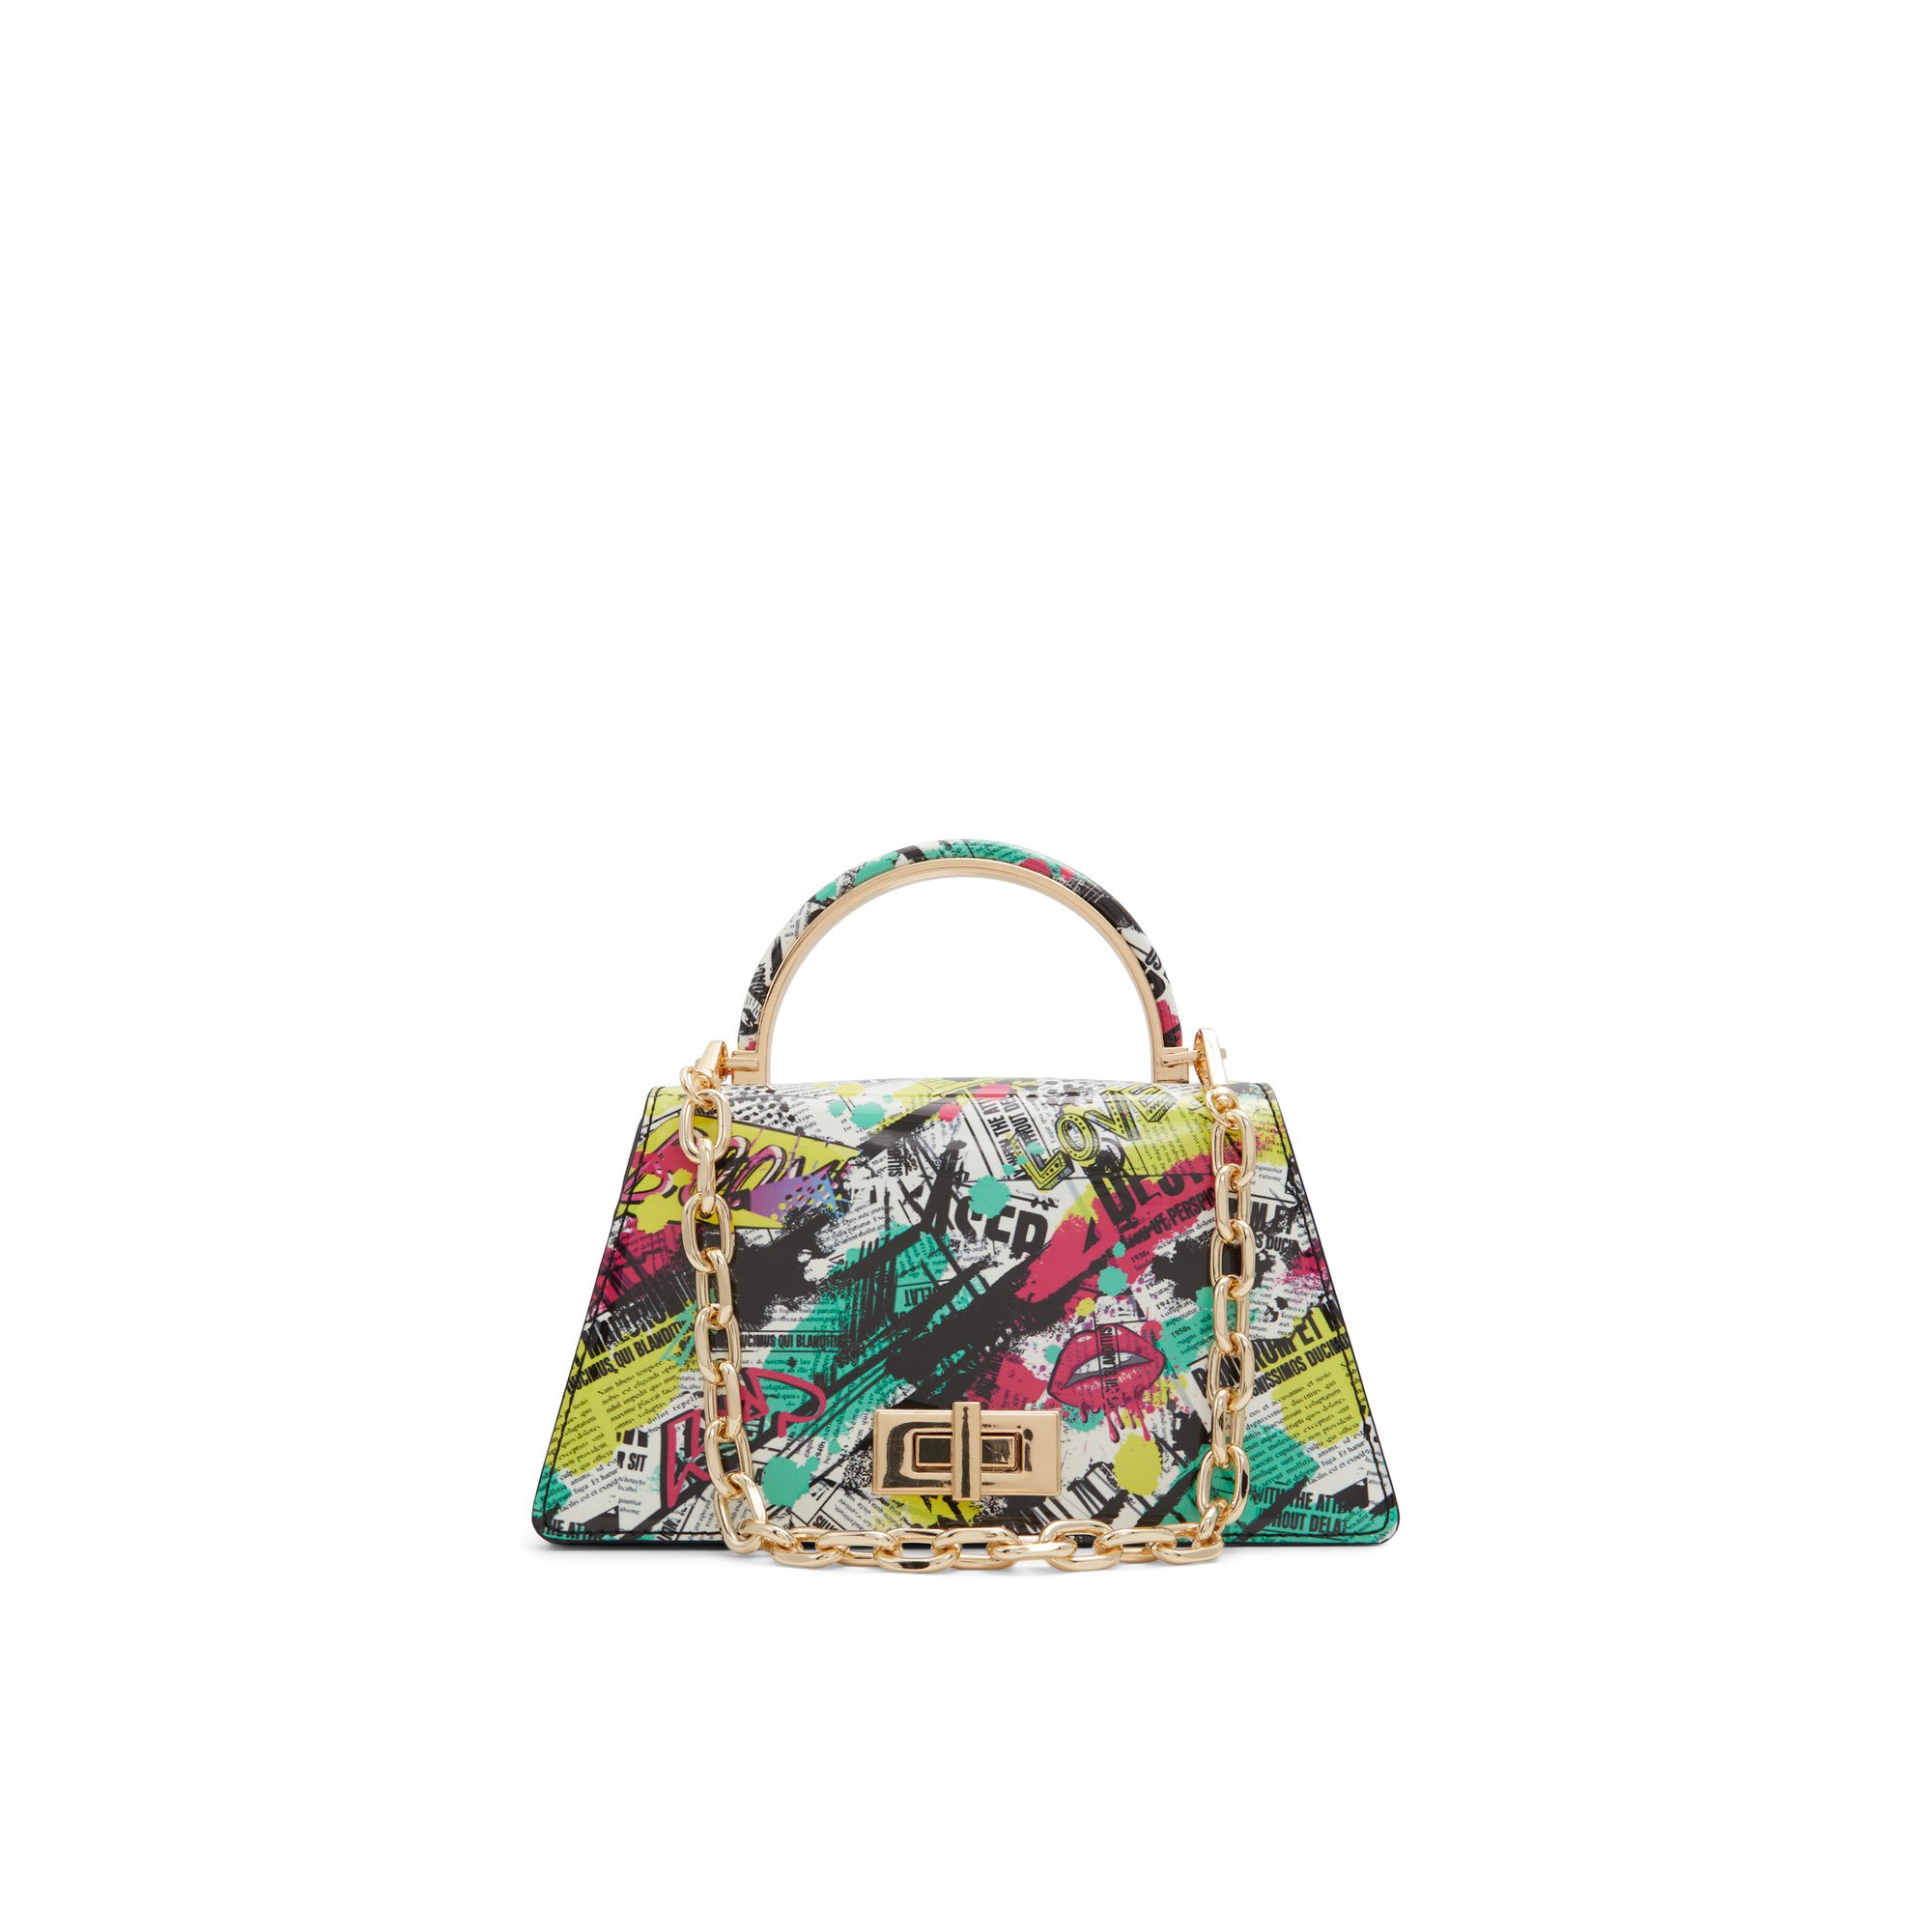 ALDO Katnisx - Women's Top Handle Handbag - White